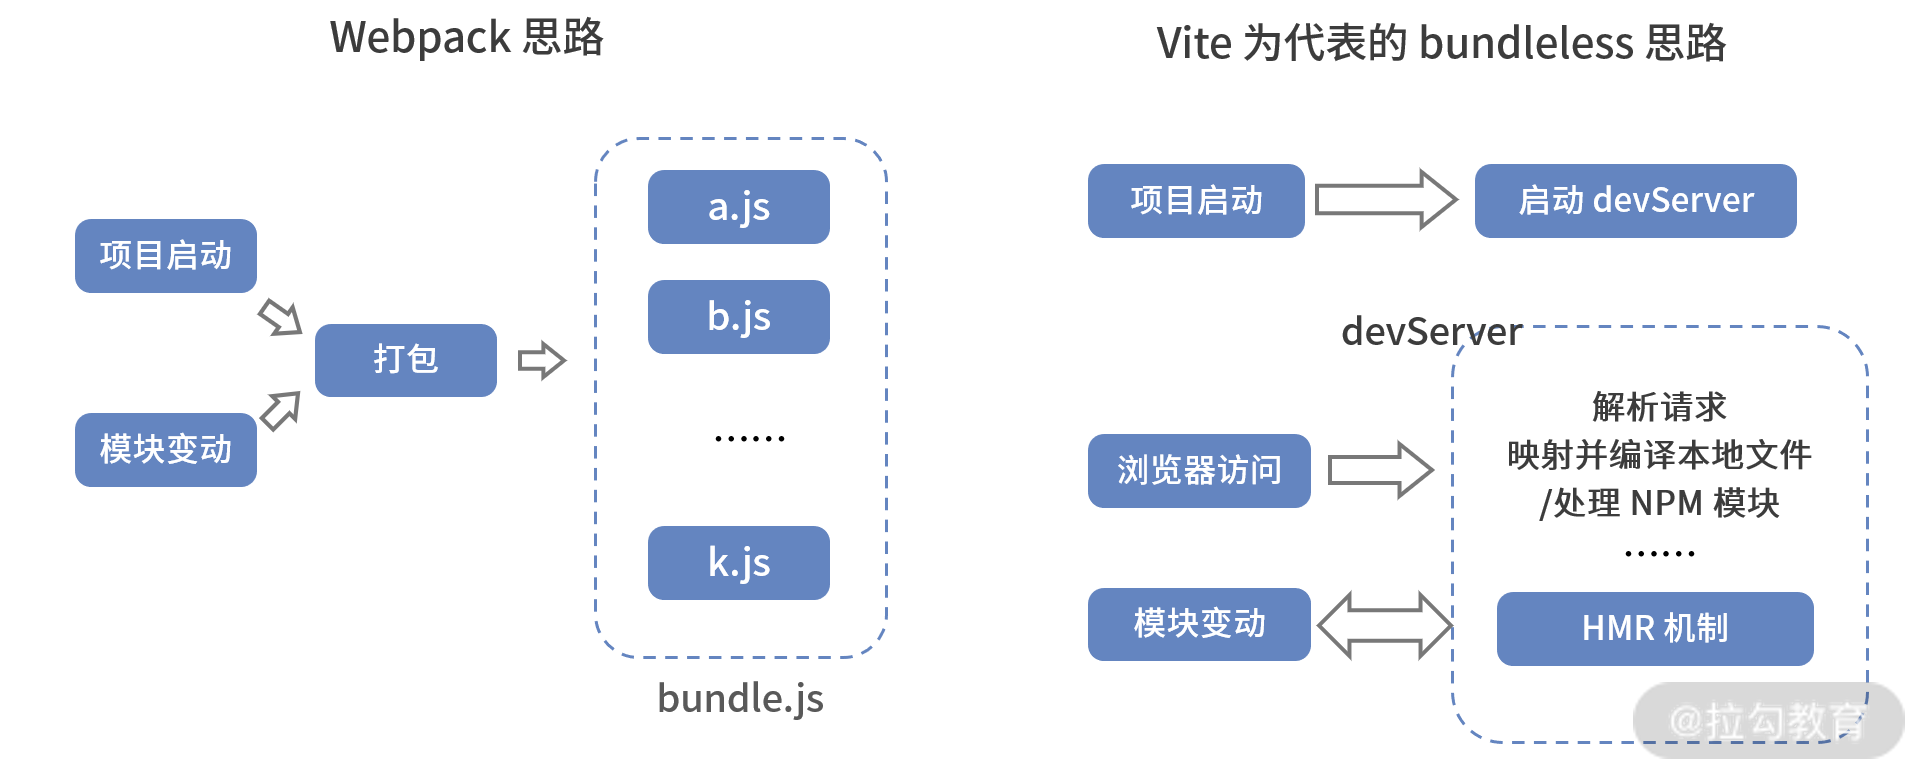 05 | Vite 实现：从源码分析出发，构建 bundleless 开发工程 - 图6